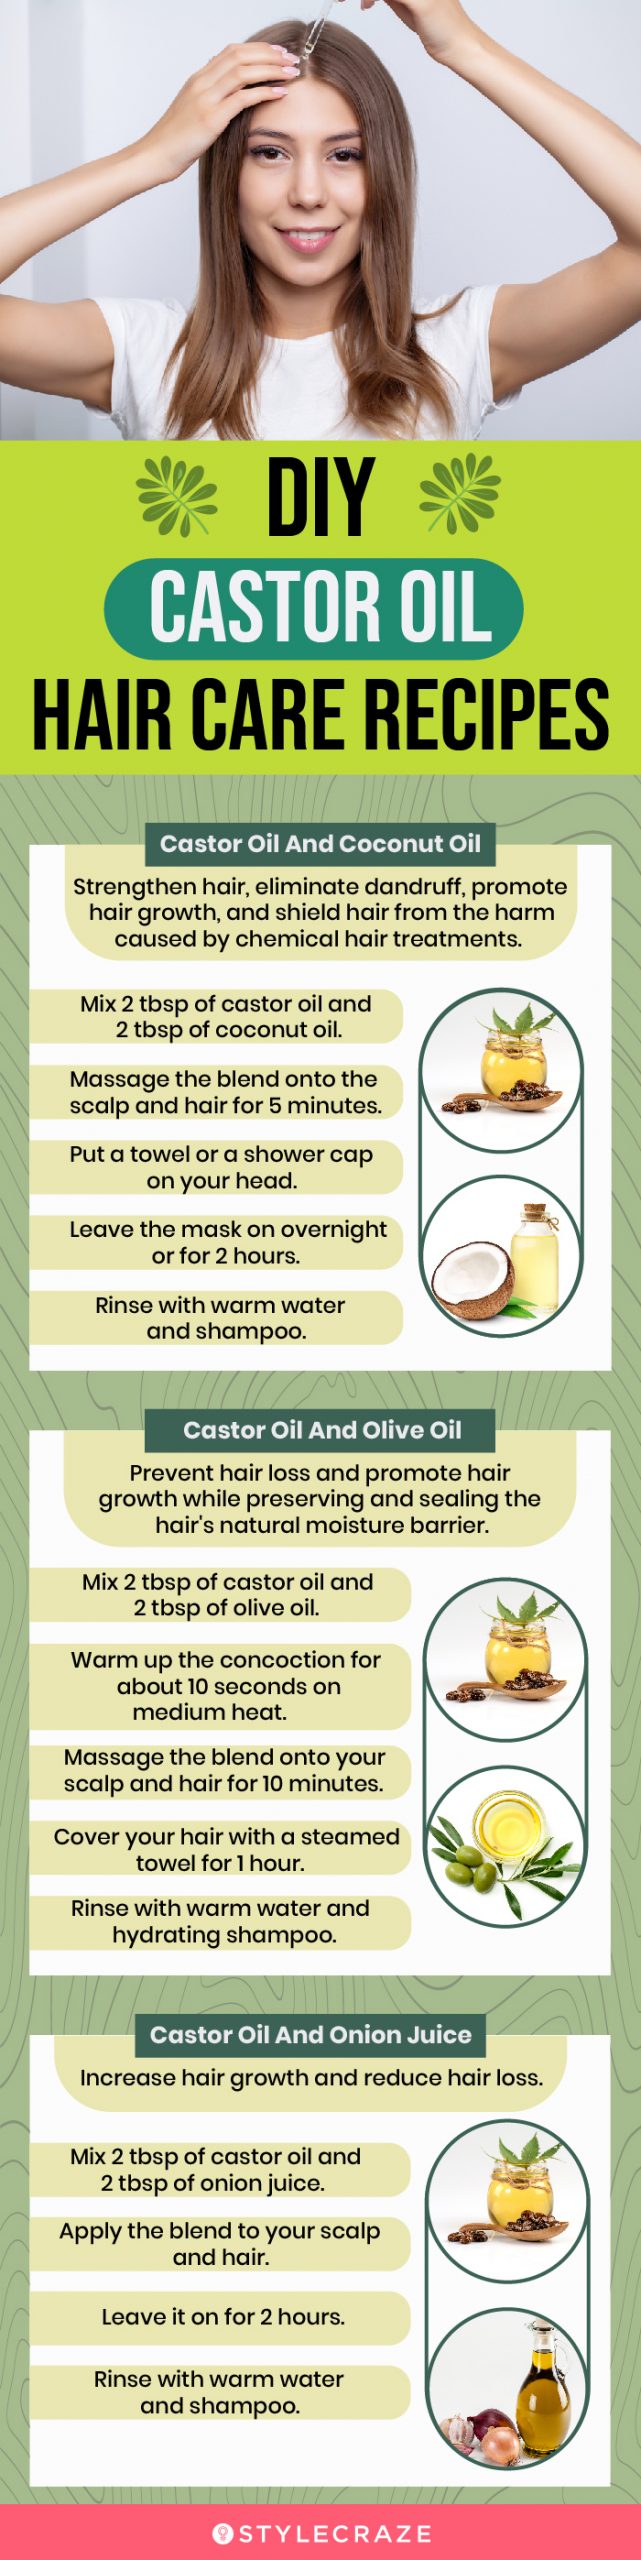 DIY Castor Oil Hair Care Recipes